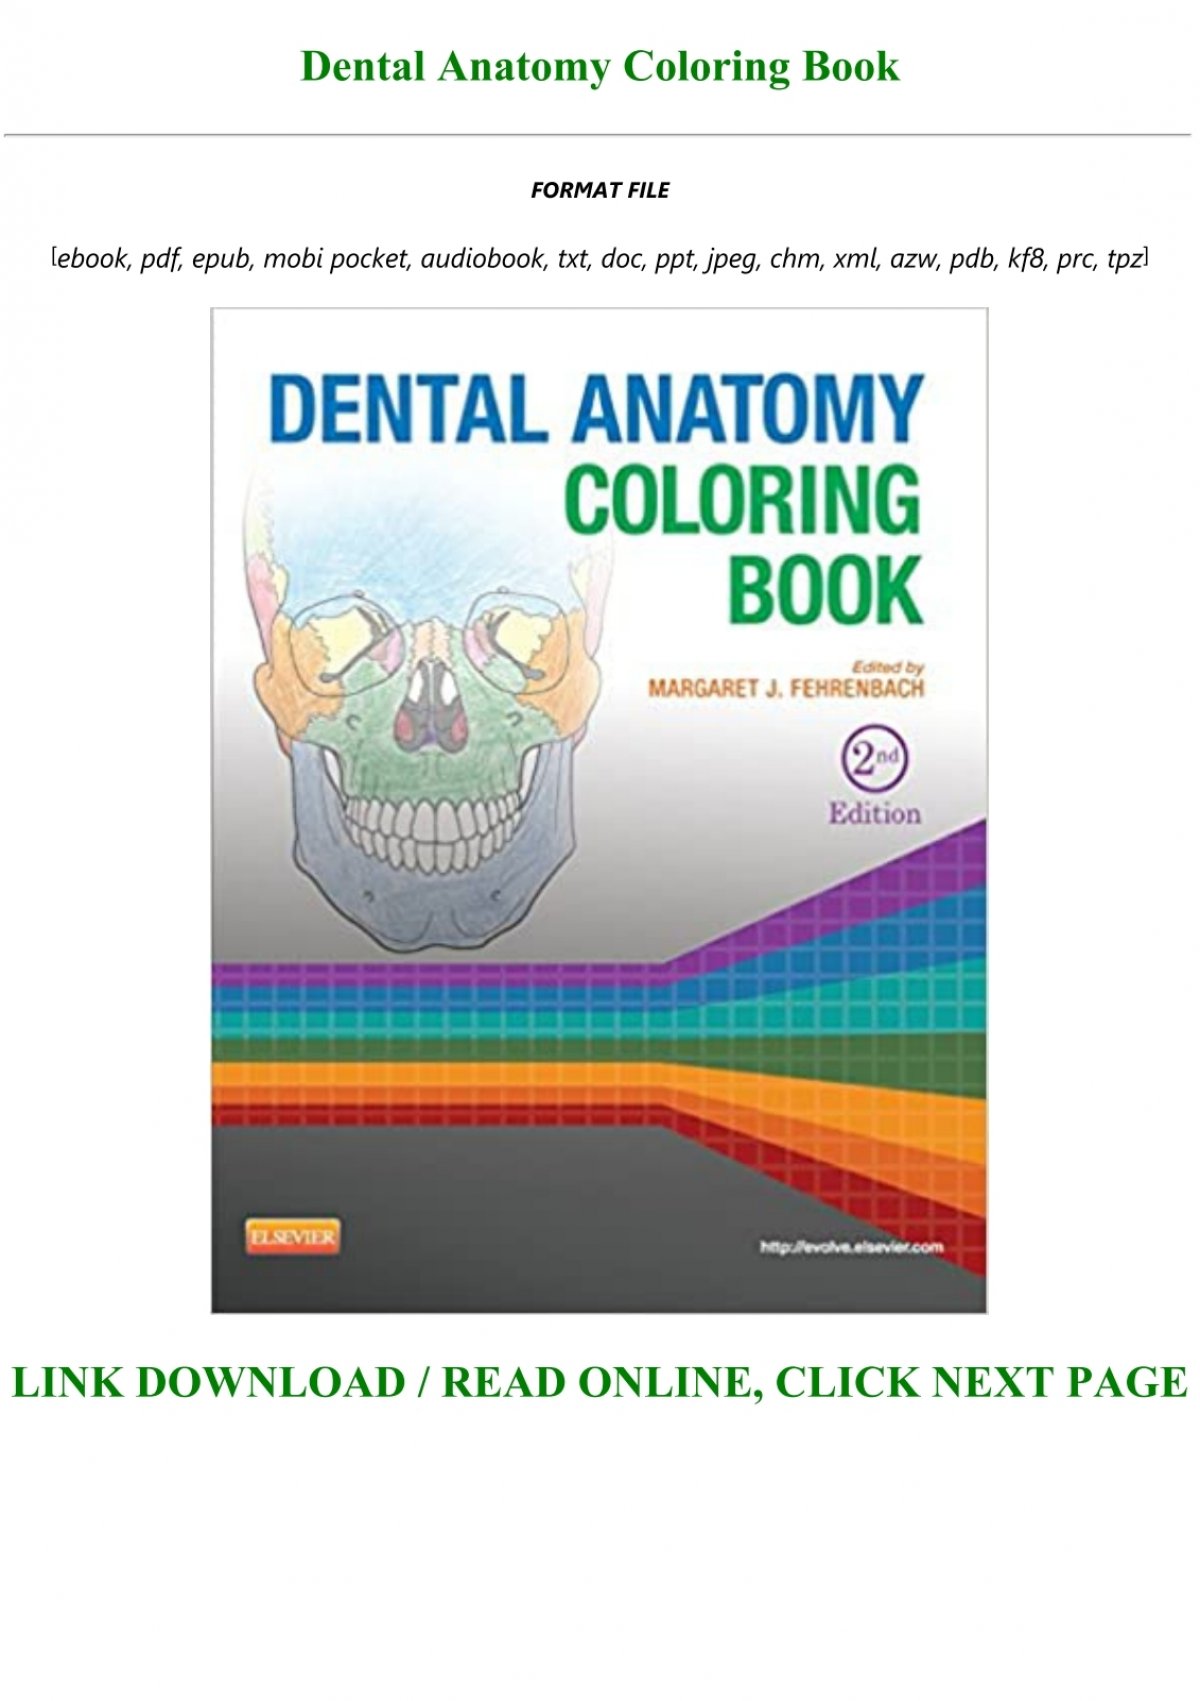 Download Free Download Dental Anatomy Coloring Book Full Pdf